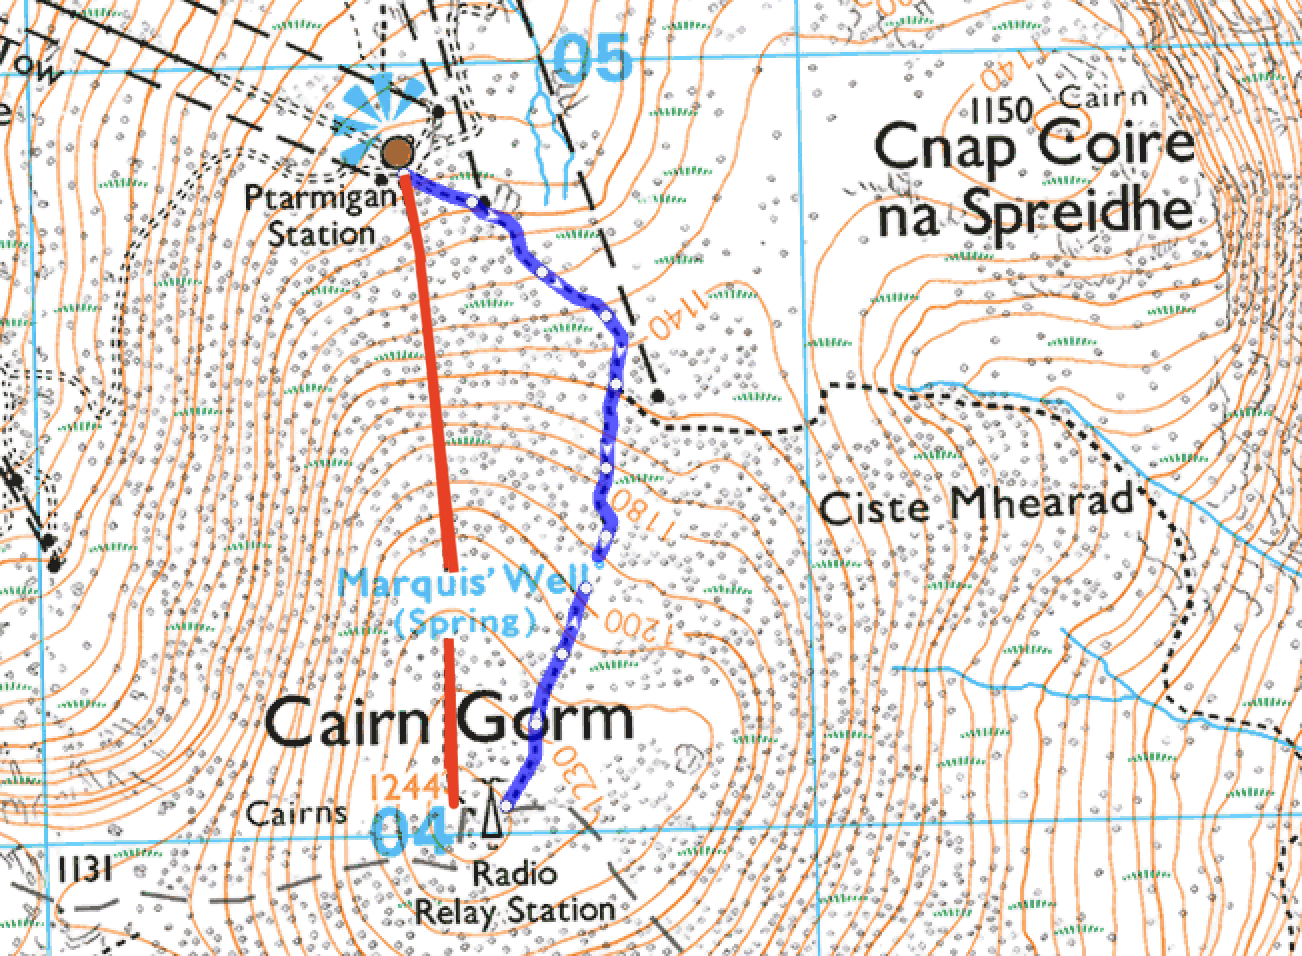 Cairn Gorm path